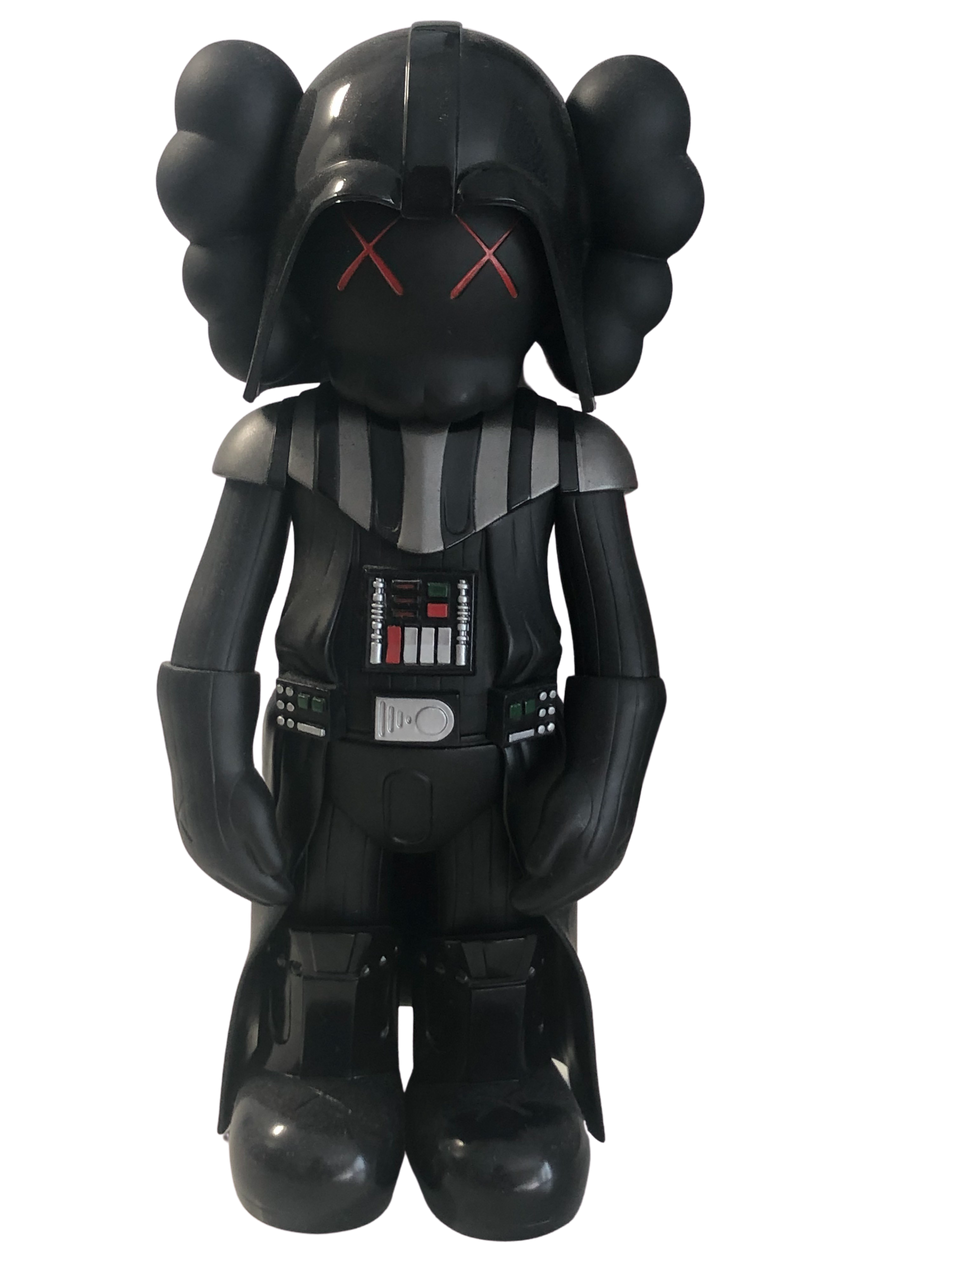 KAWS Star Wars Darth Vader Companion Vinyl Figure Black